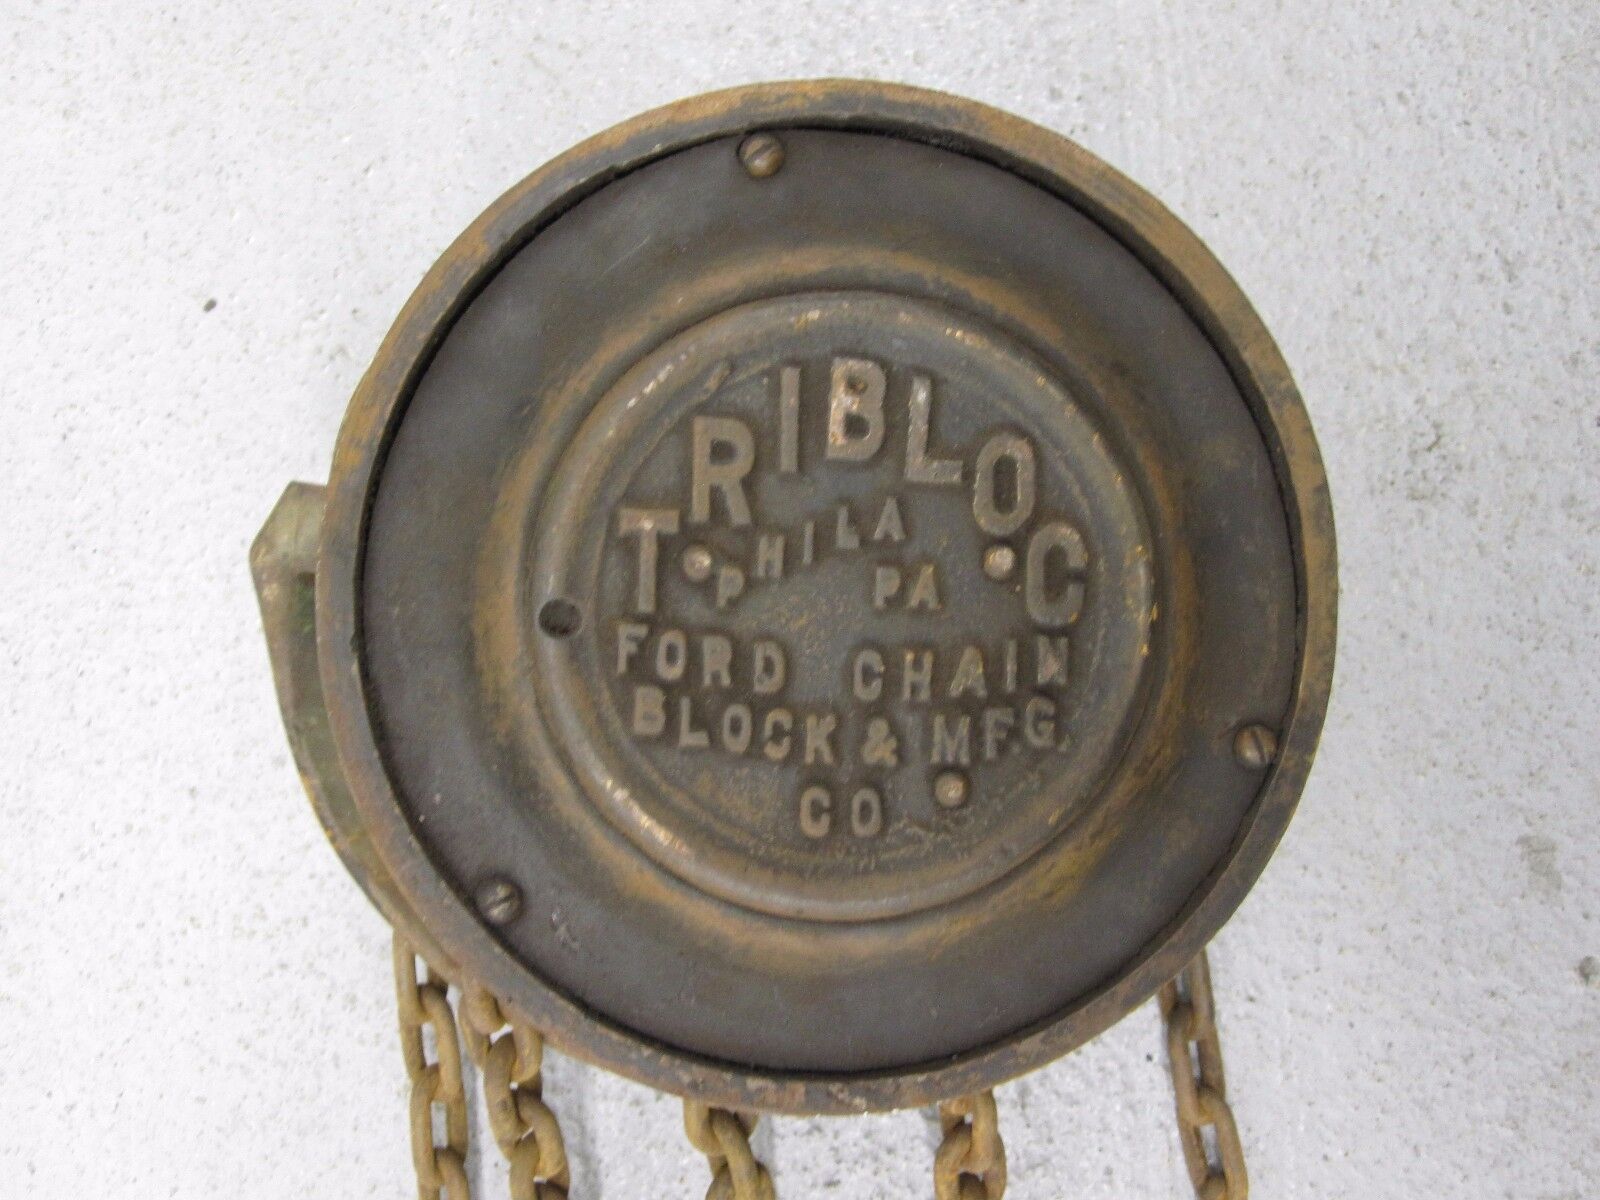 OLD FORD CHAIN BLOCK & MFG CO PHILADELPHIA PA 1909 TRIBLOC 1/2 TON ENGINE HOIST